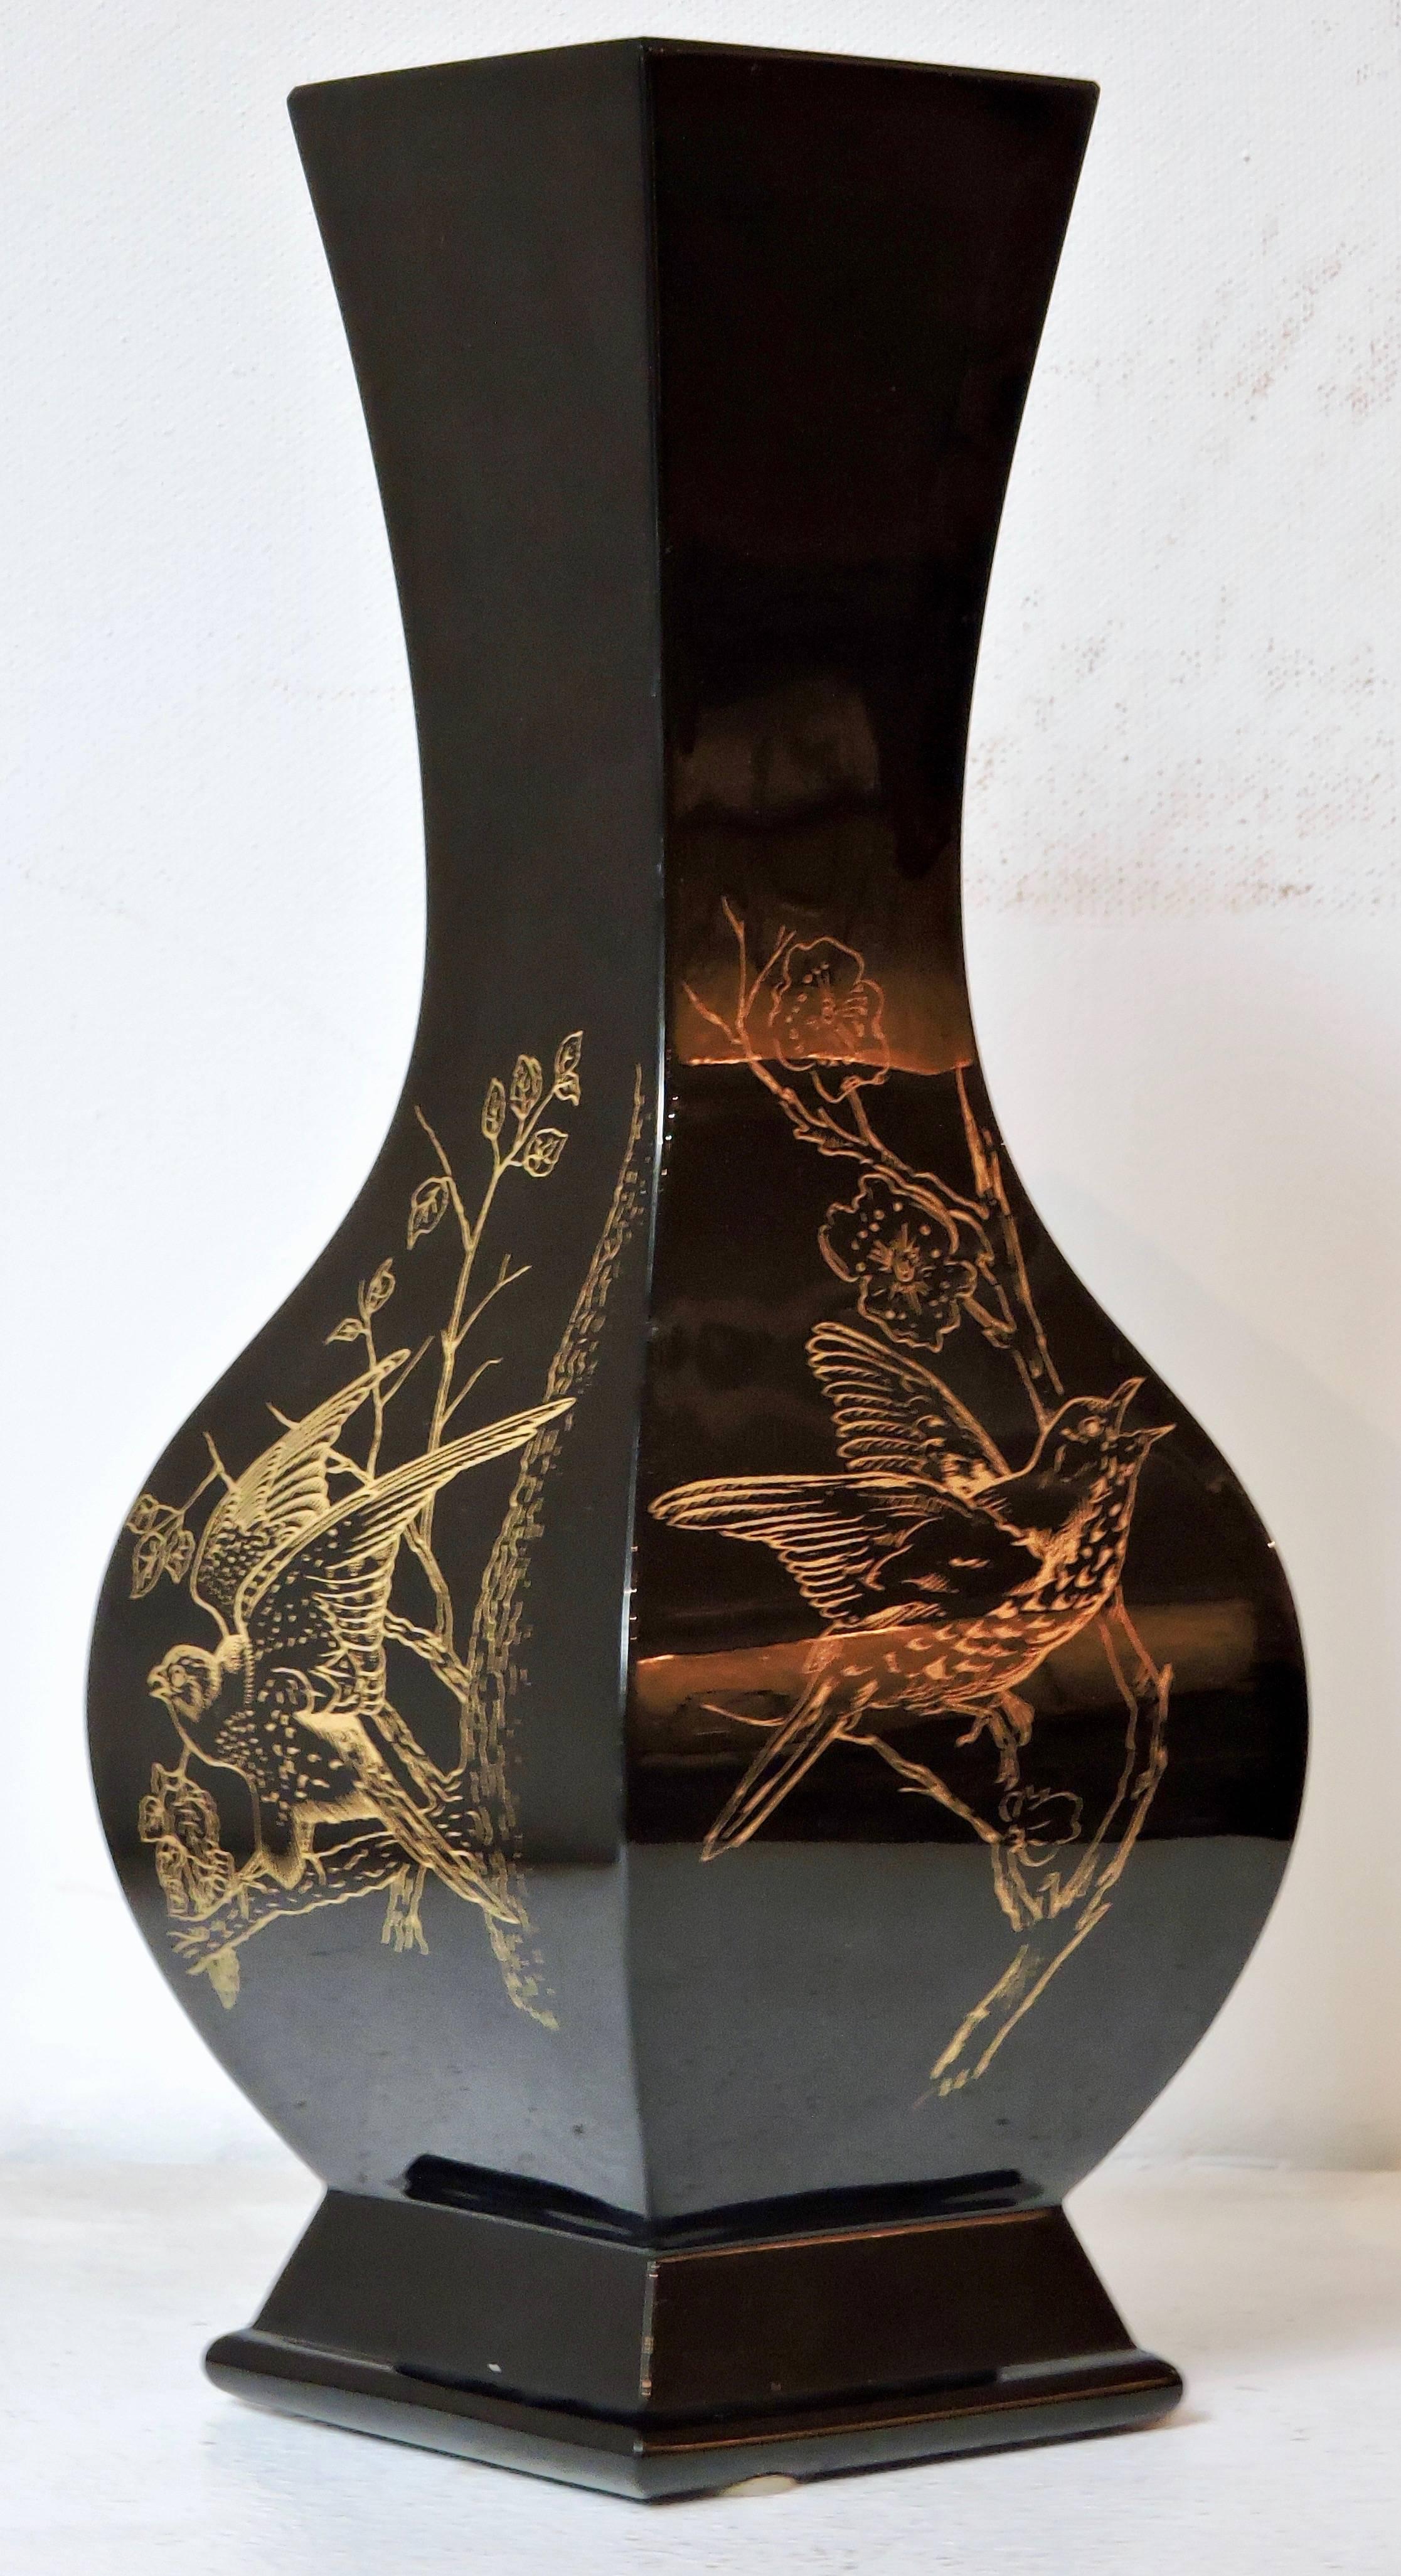 A Japonisme Cristallerie de Baccarat black opaline baluster glass
Birds and Japanese trees gold painted
Sand Blast Cristallerie de Baccarat stamp under the base.